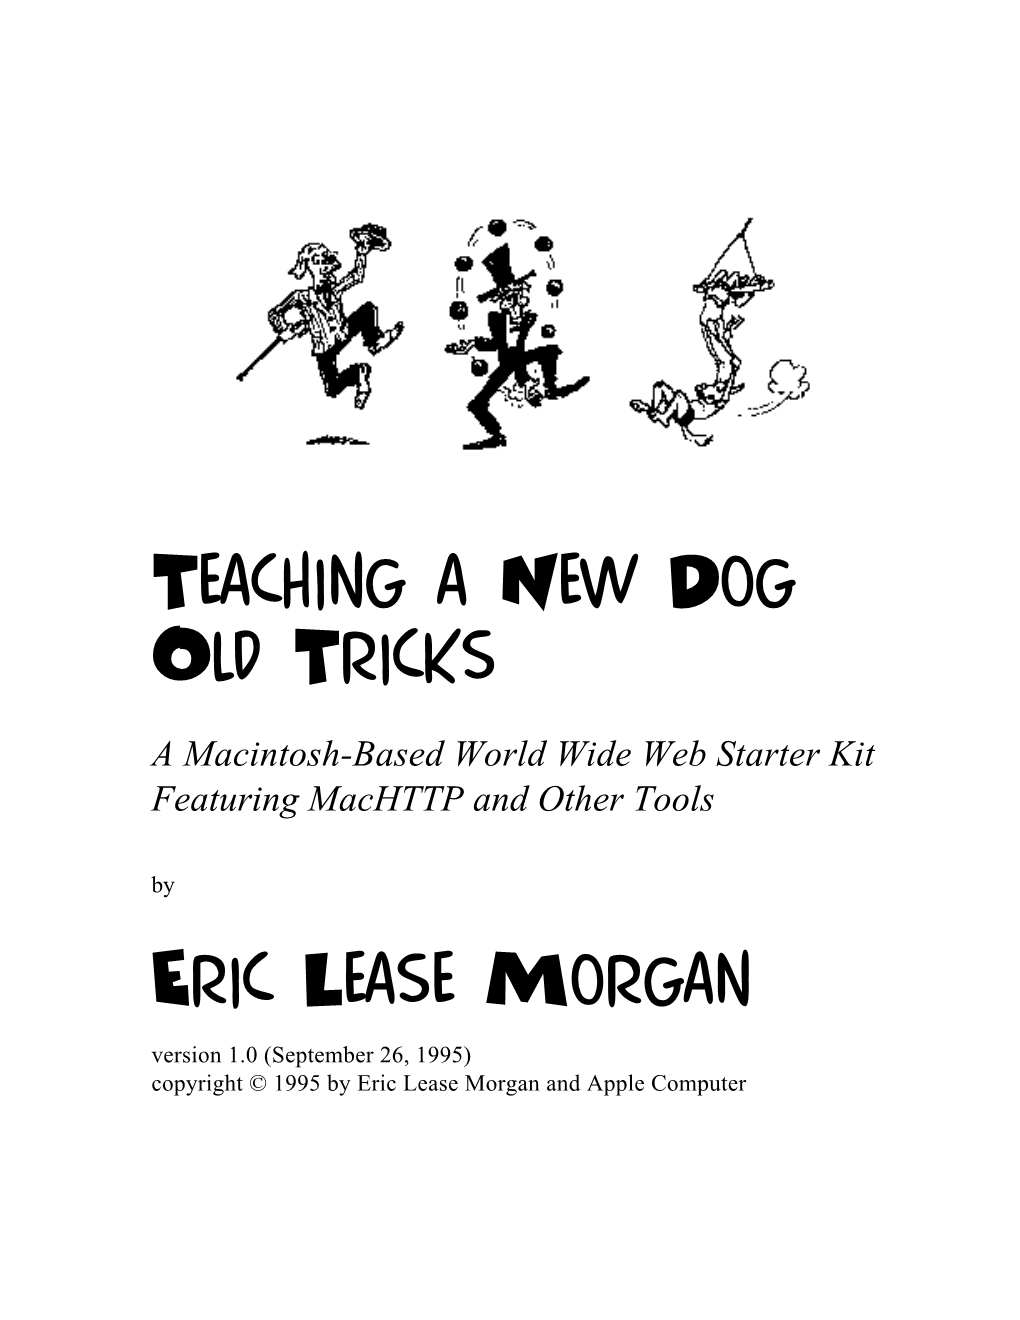 Teaching a New Dog Old Tricks - Ii Acknowledgements